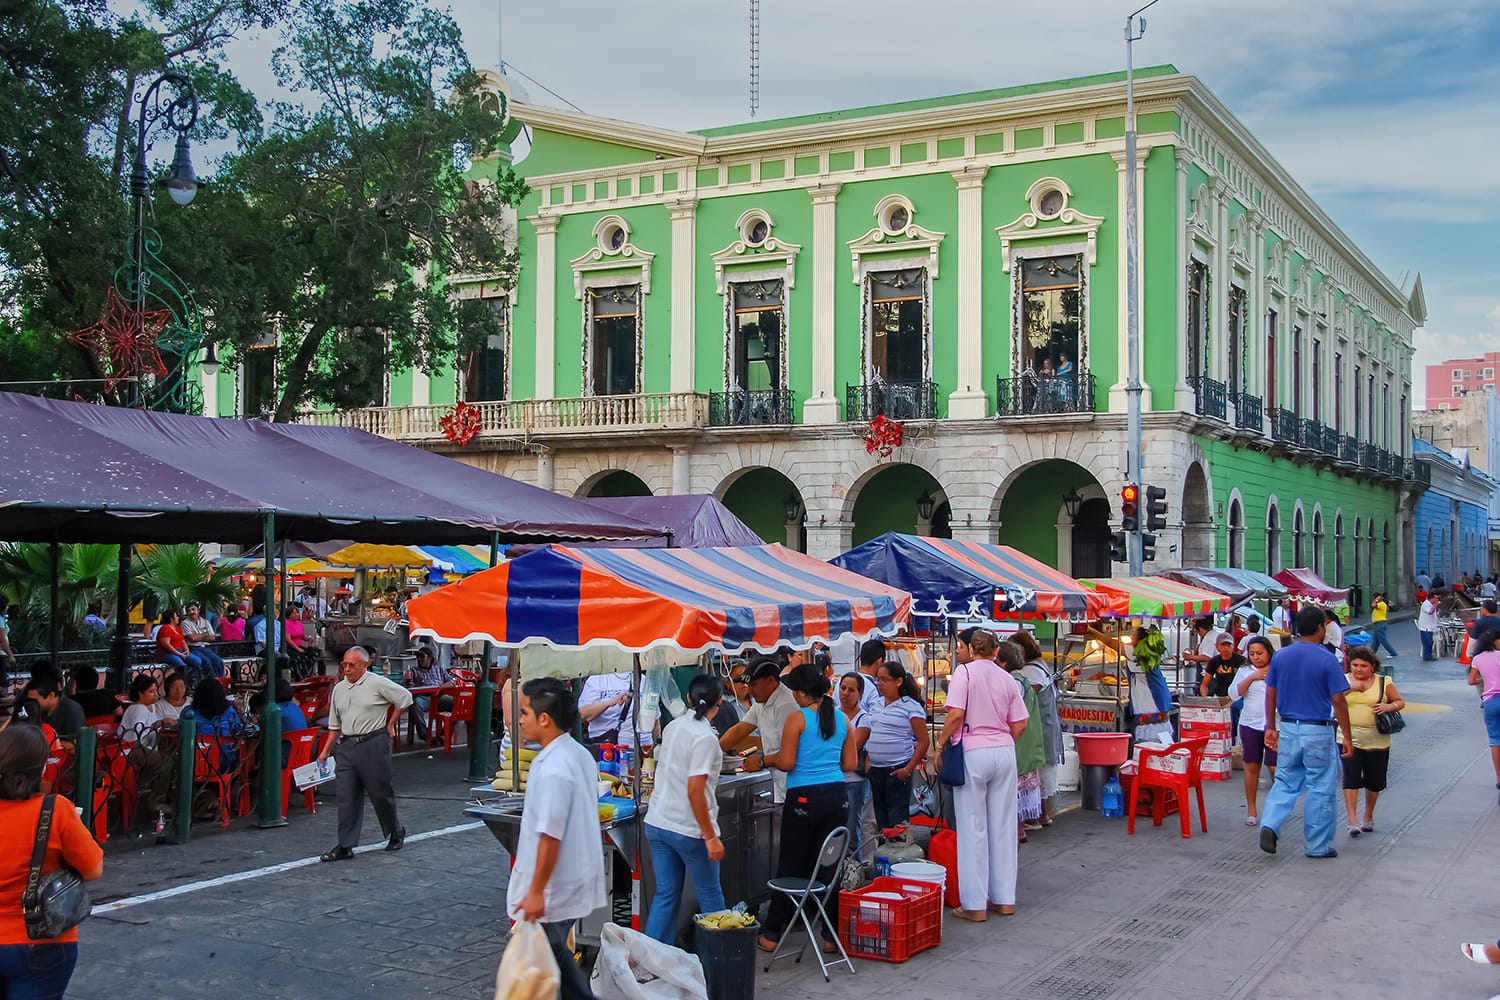 Market at the Plaza Grande in Merida, Mexico